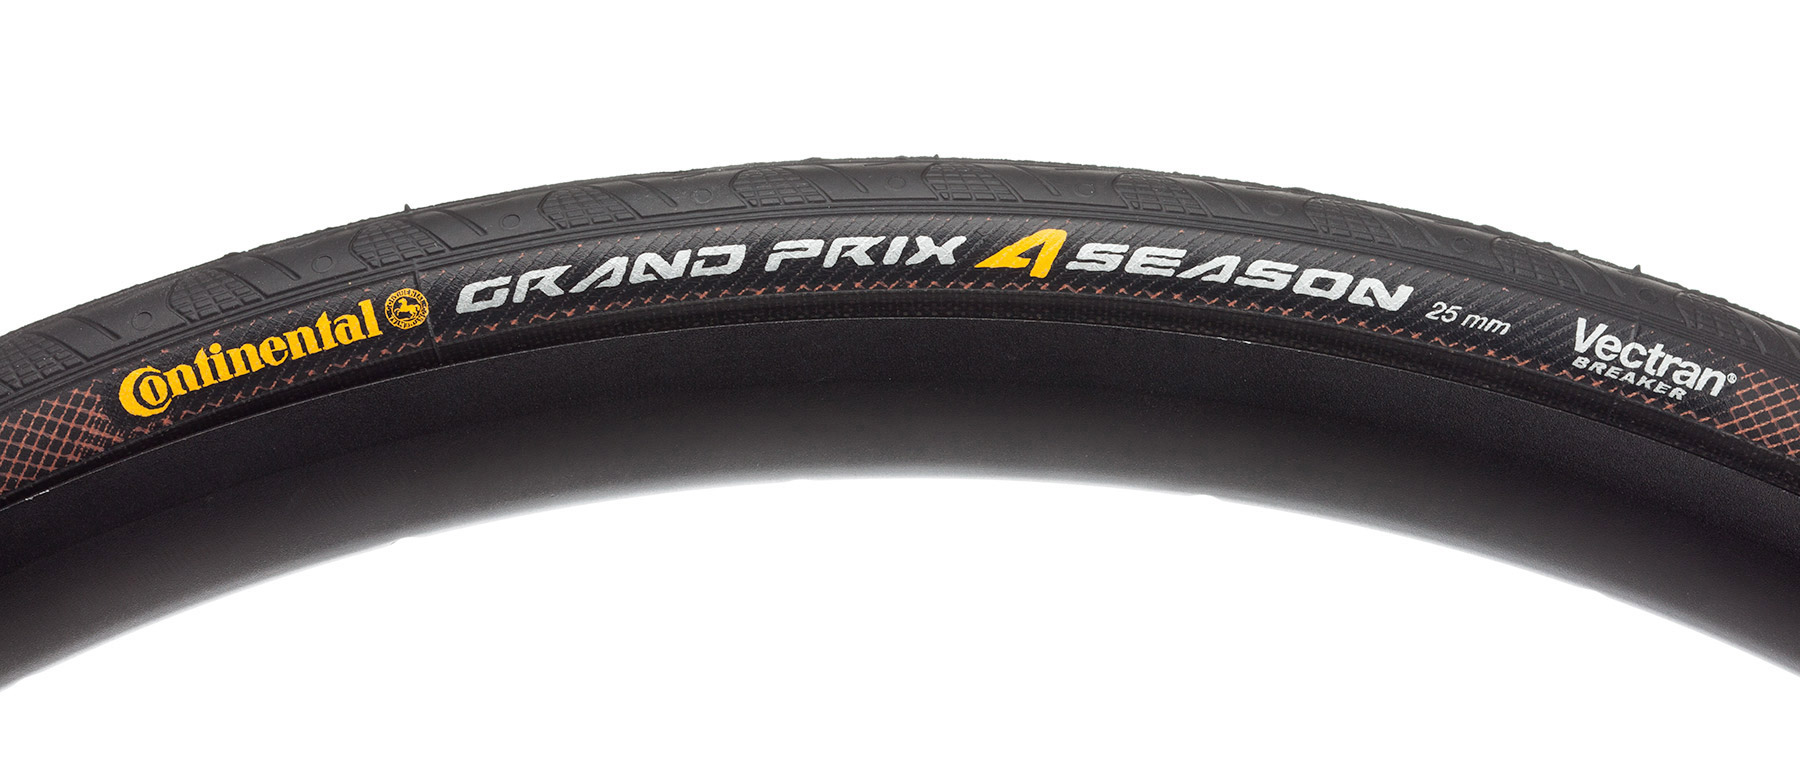 Continental Grand Prix 4-Season Road Tire 2-Pack